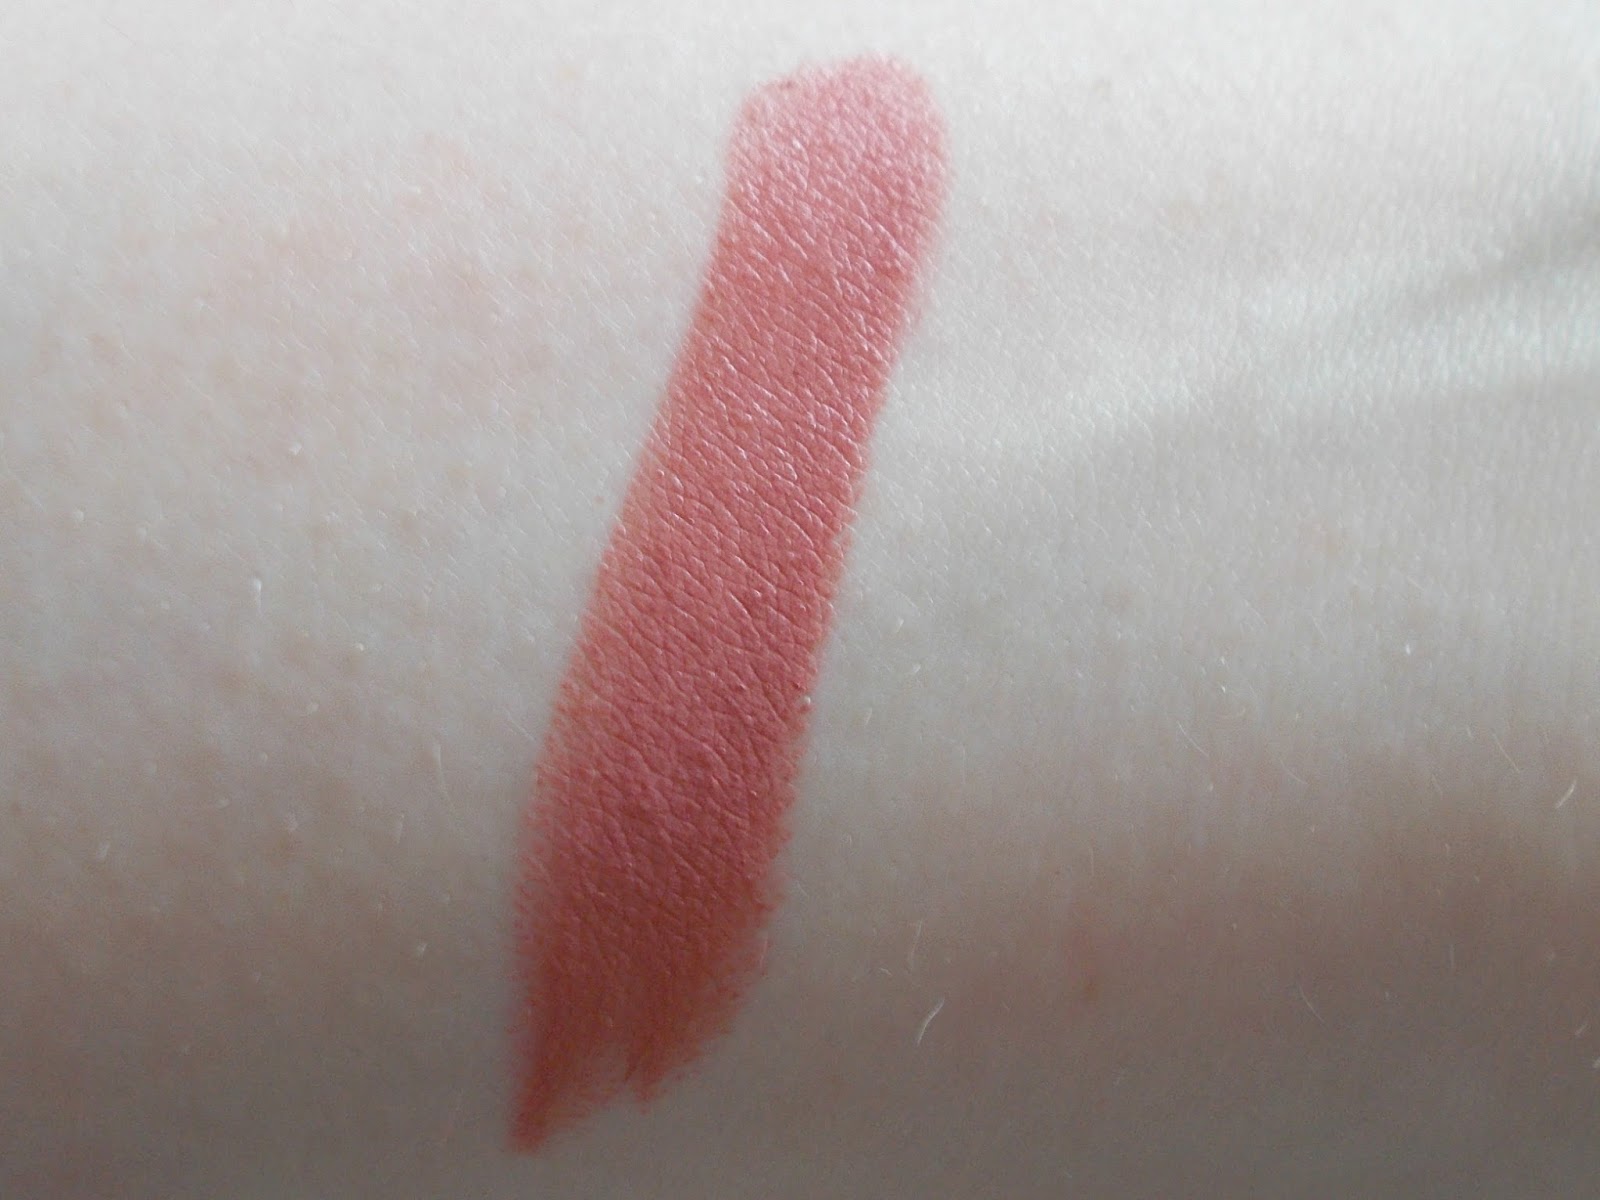 NARS Audacious Lipstick in Anita review swatch